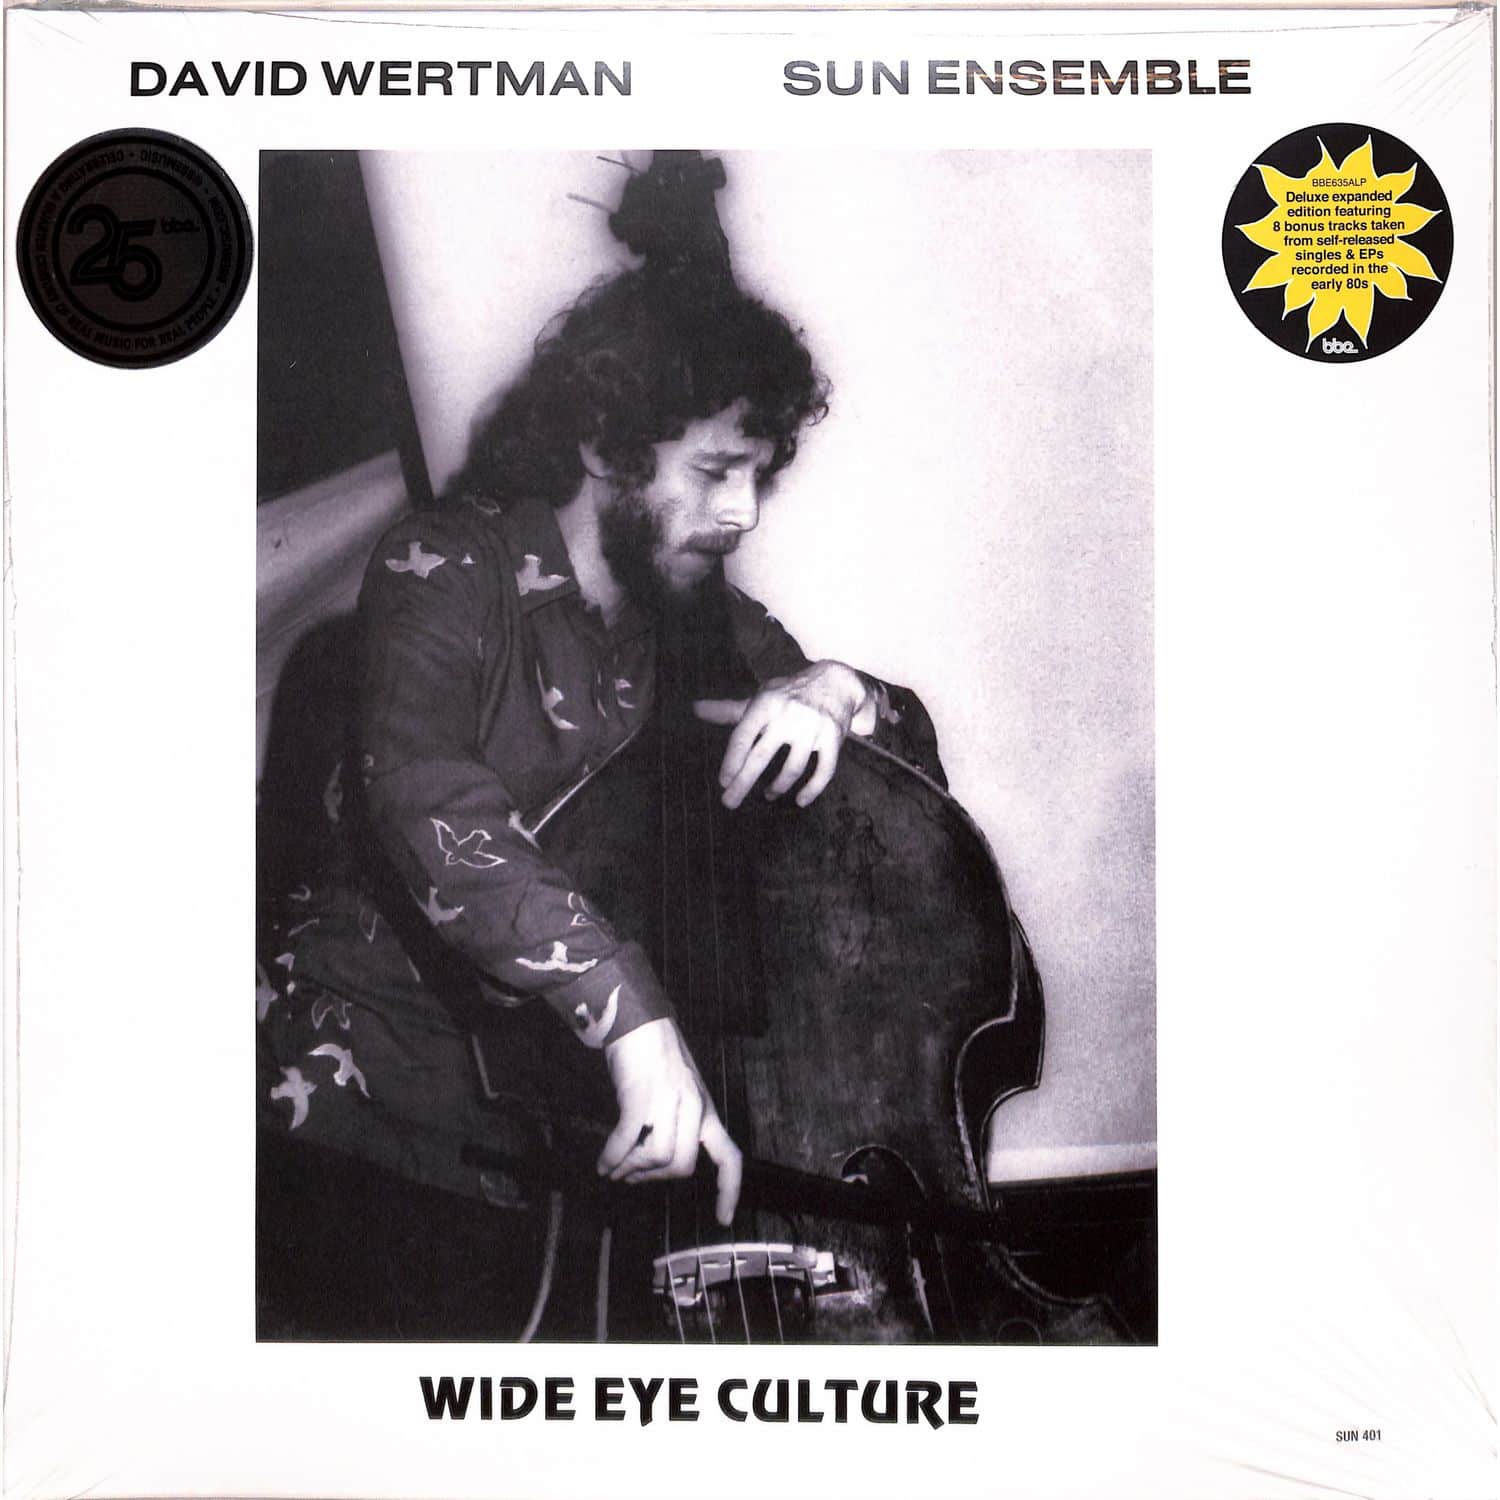 David Wertman & Sun Ensemble - WIDE EYE CULTURE 